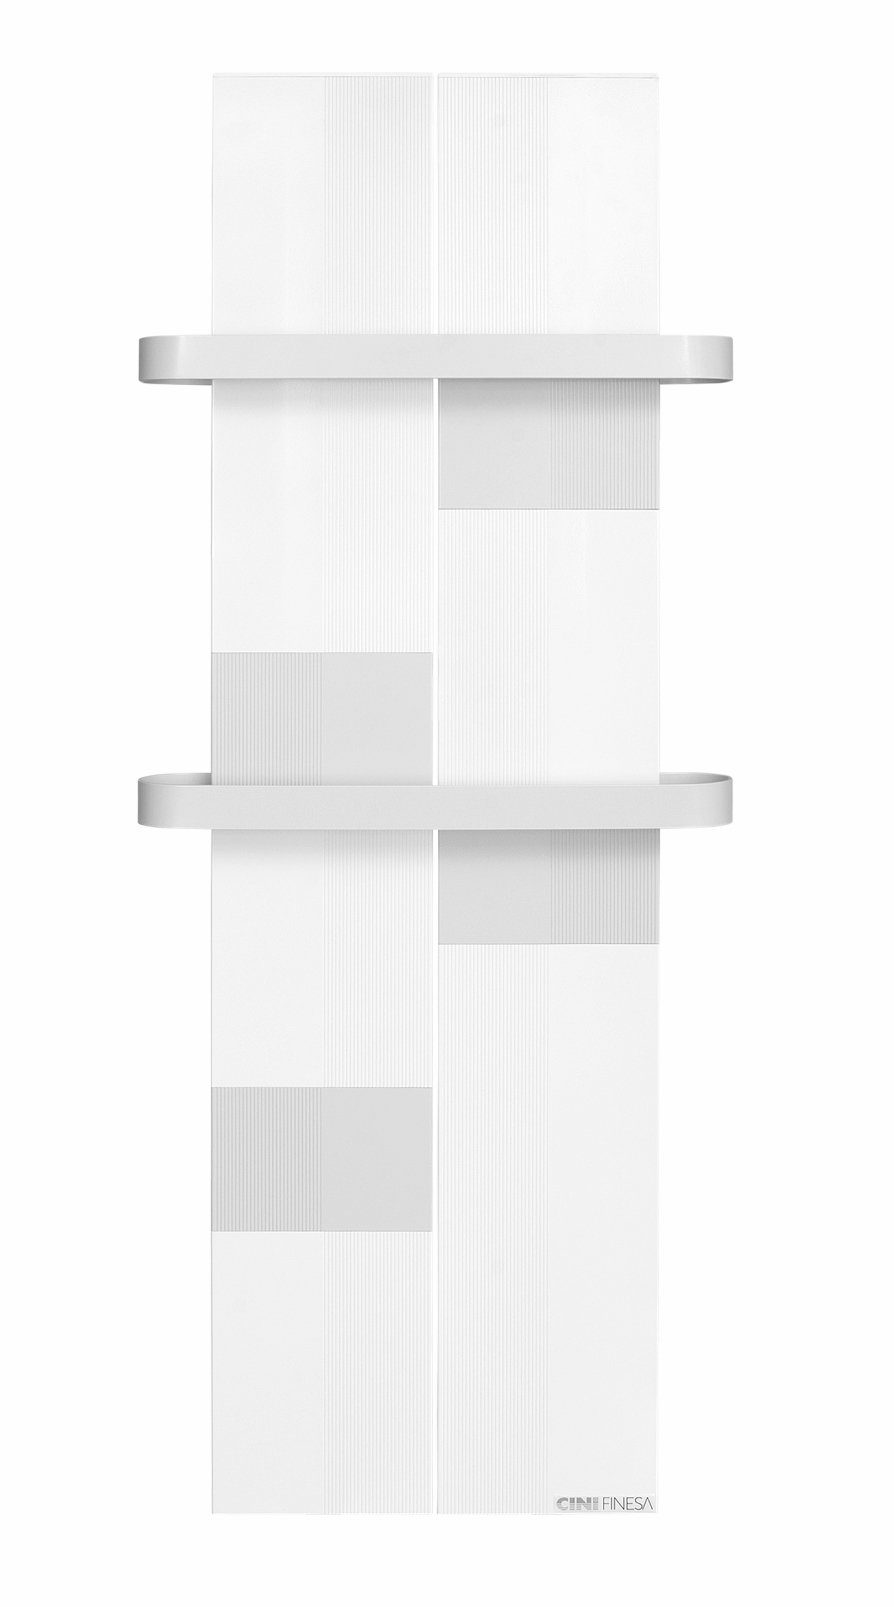 Finesa Badheizkörper Wärmeabgabe 400-700 W, Mittelanschluss Grau-Weiß